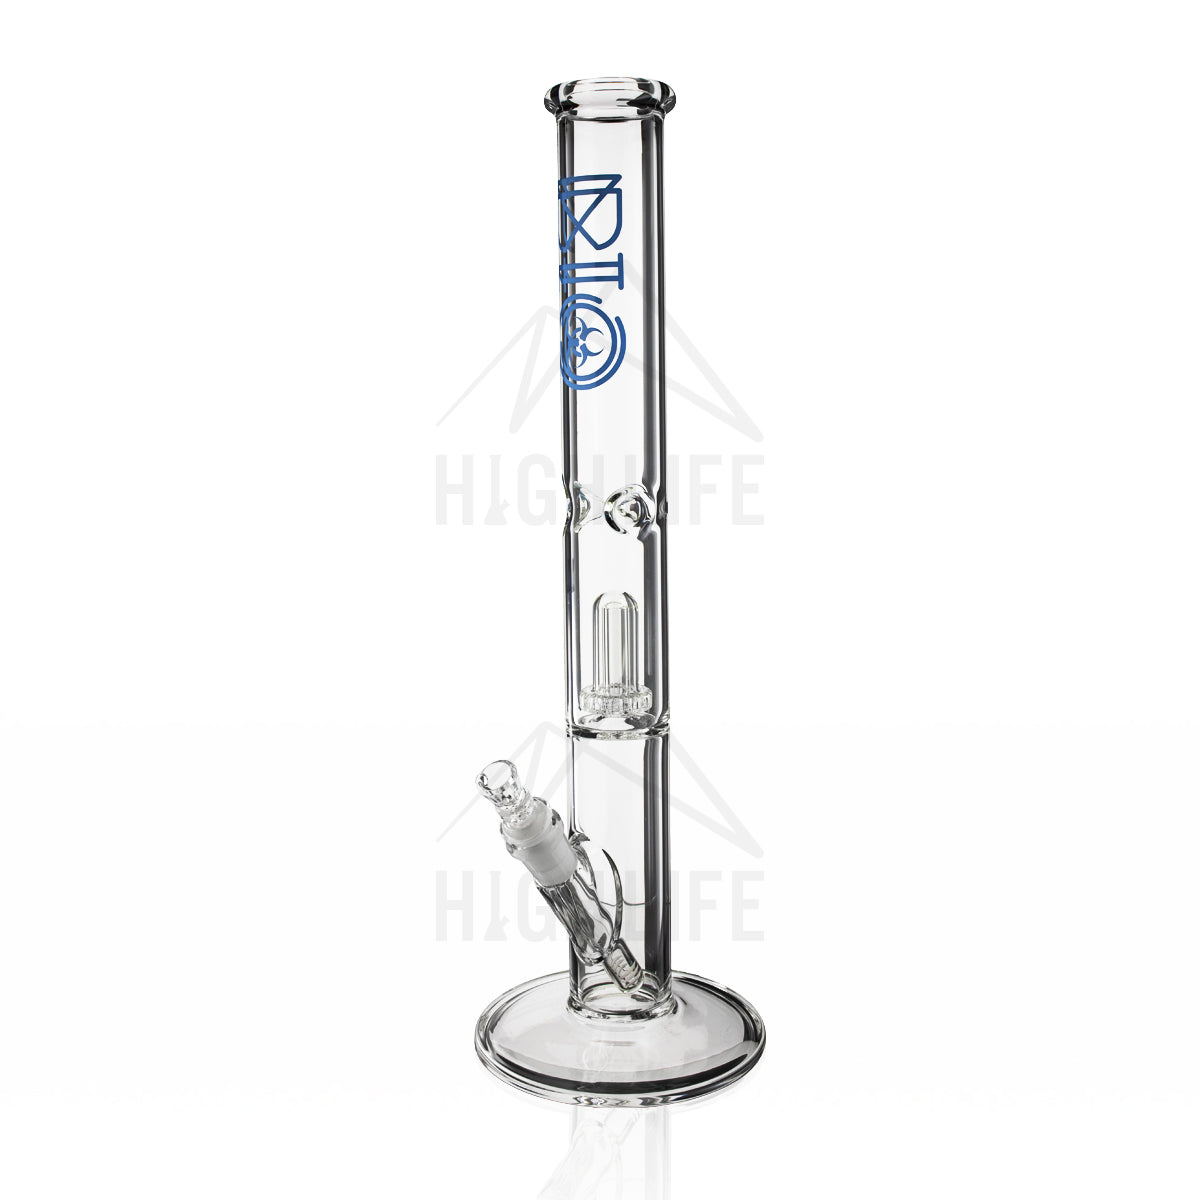 BIO Glass 18" Showerhead Perc Straight Water Pipe